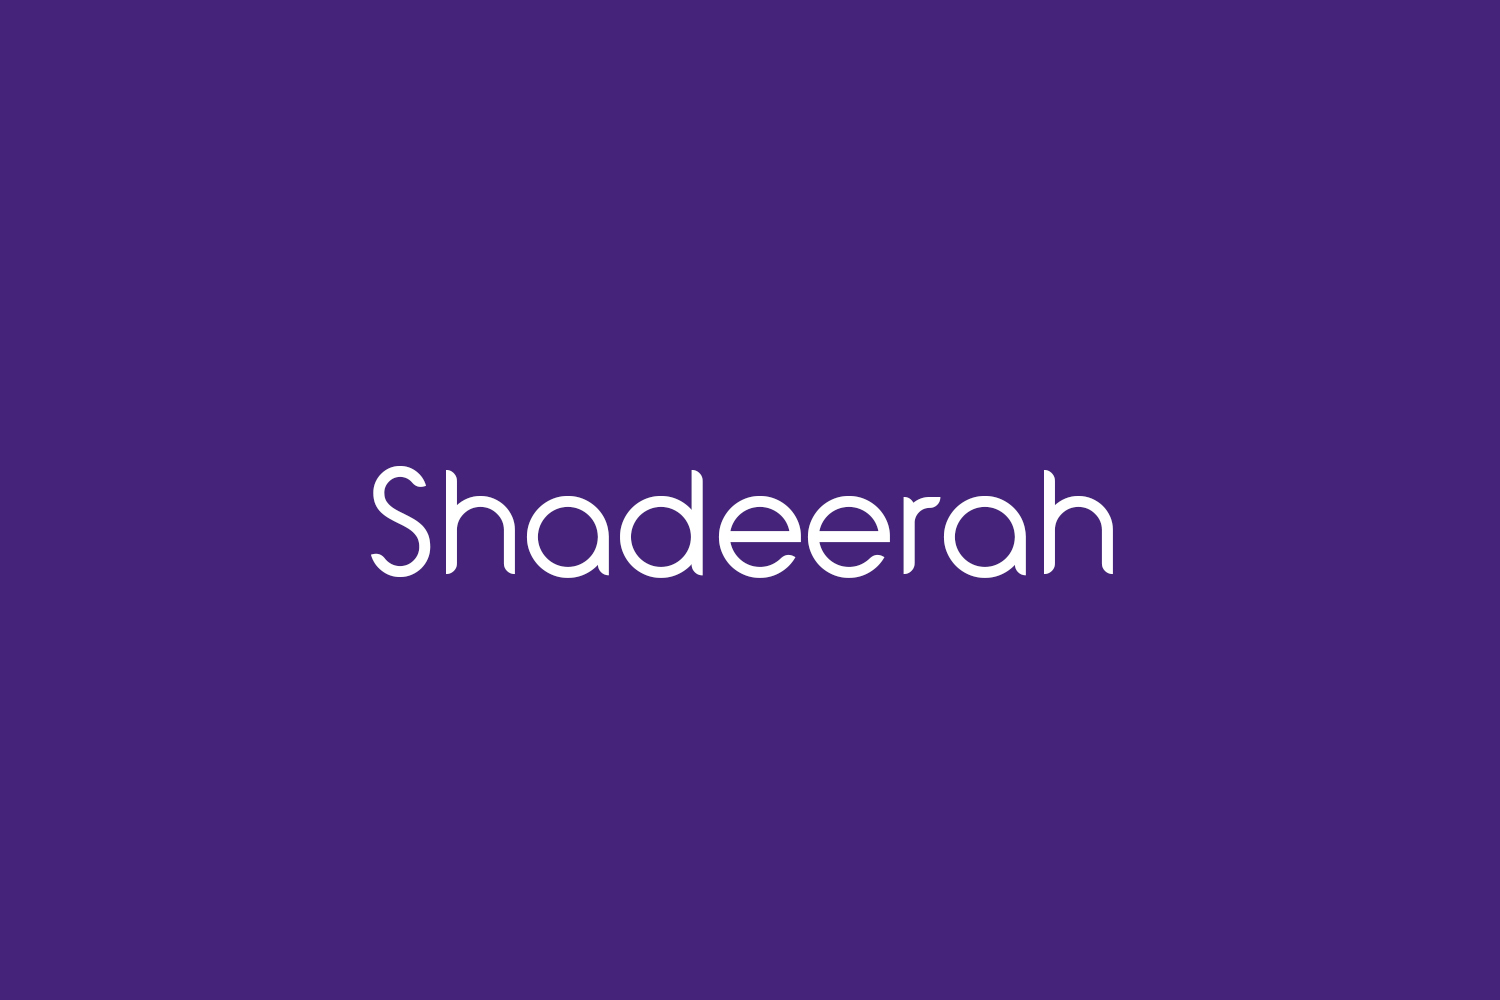 Shadeerah